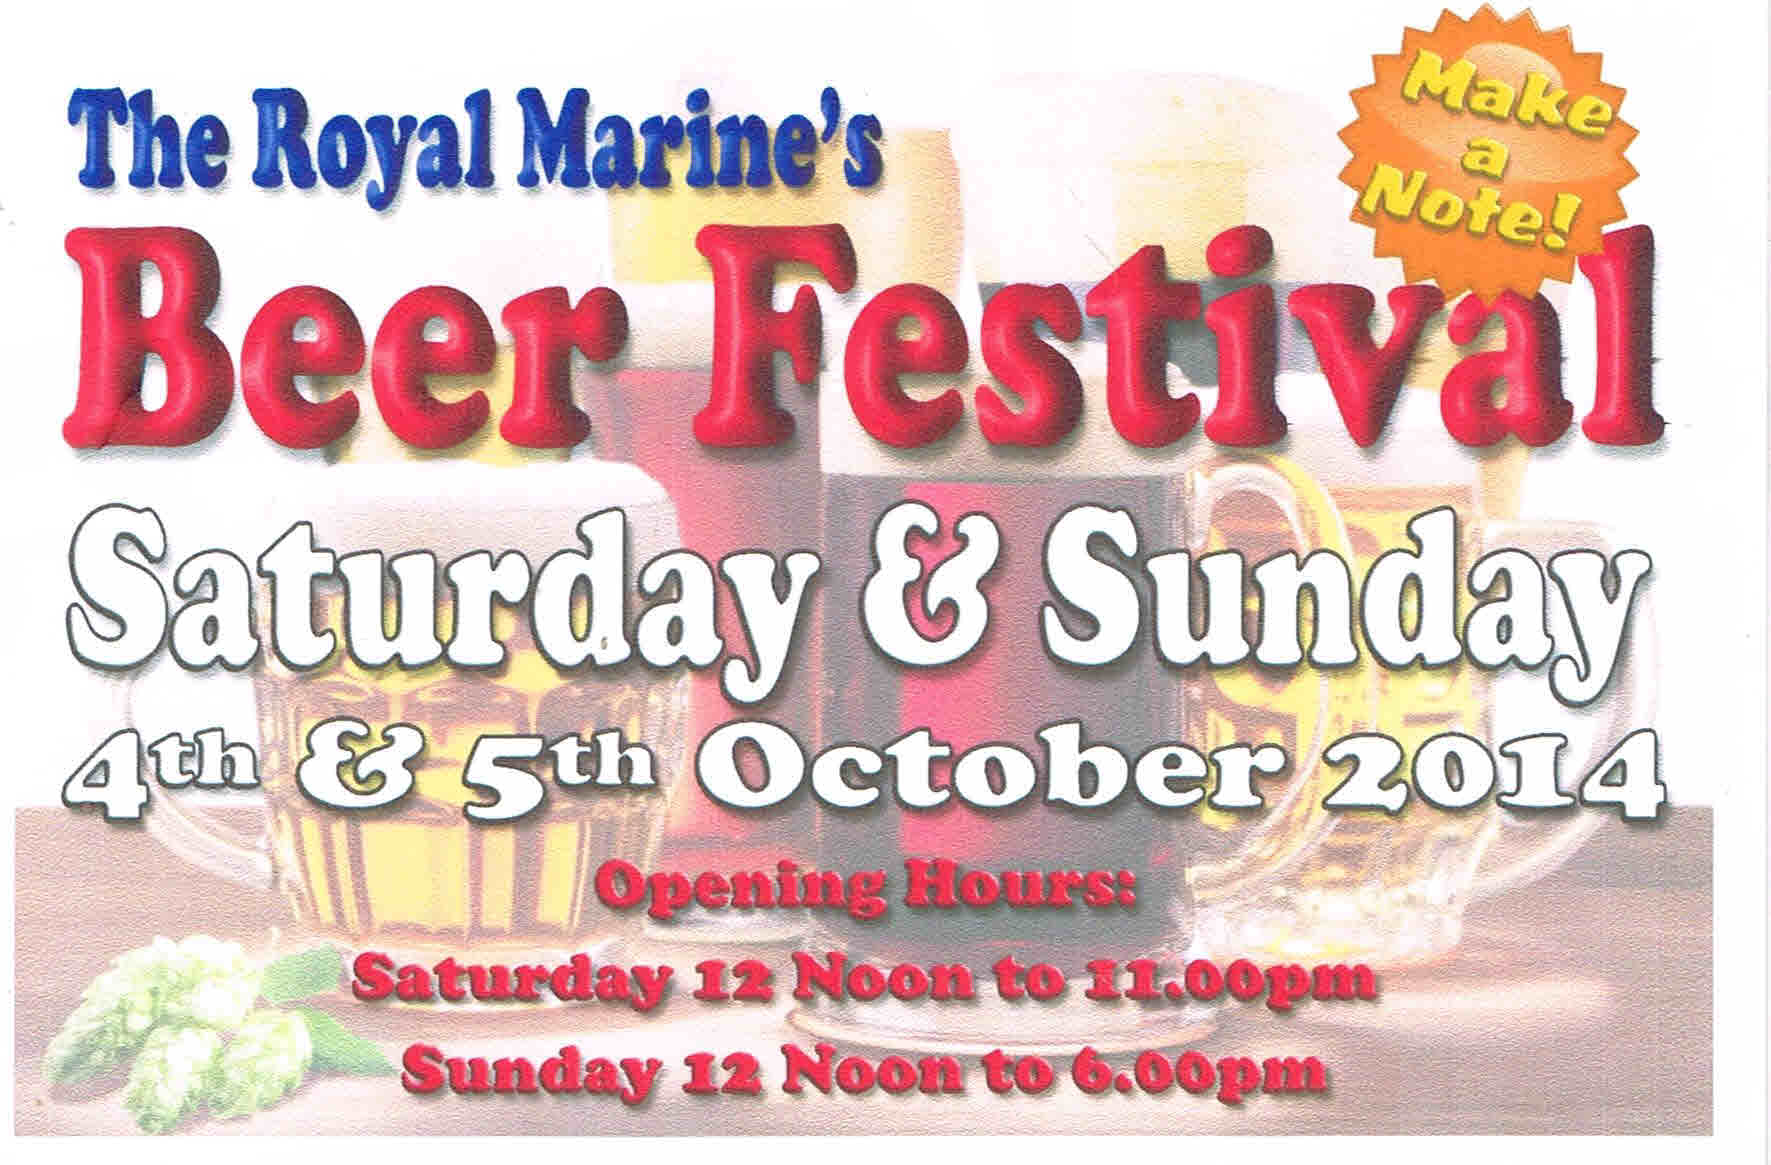 Beer Festival – The Royal Marine